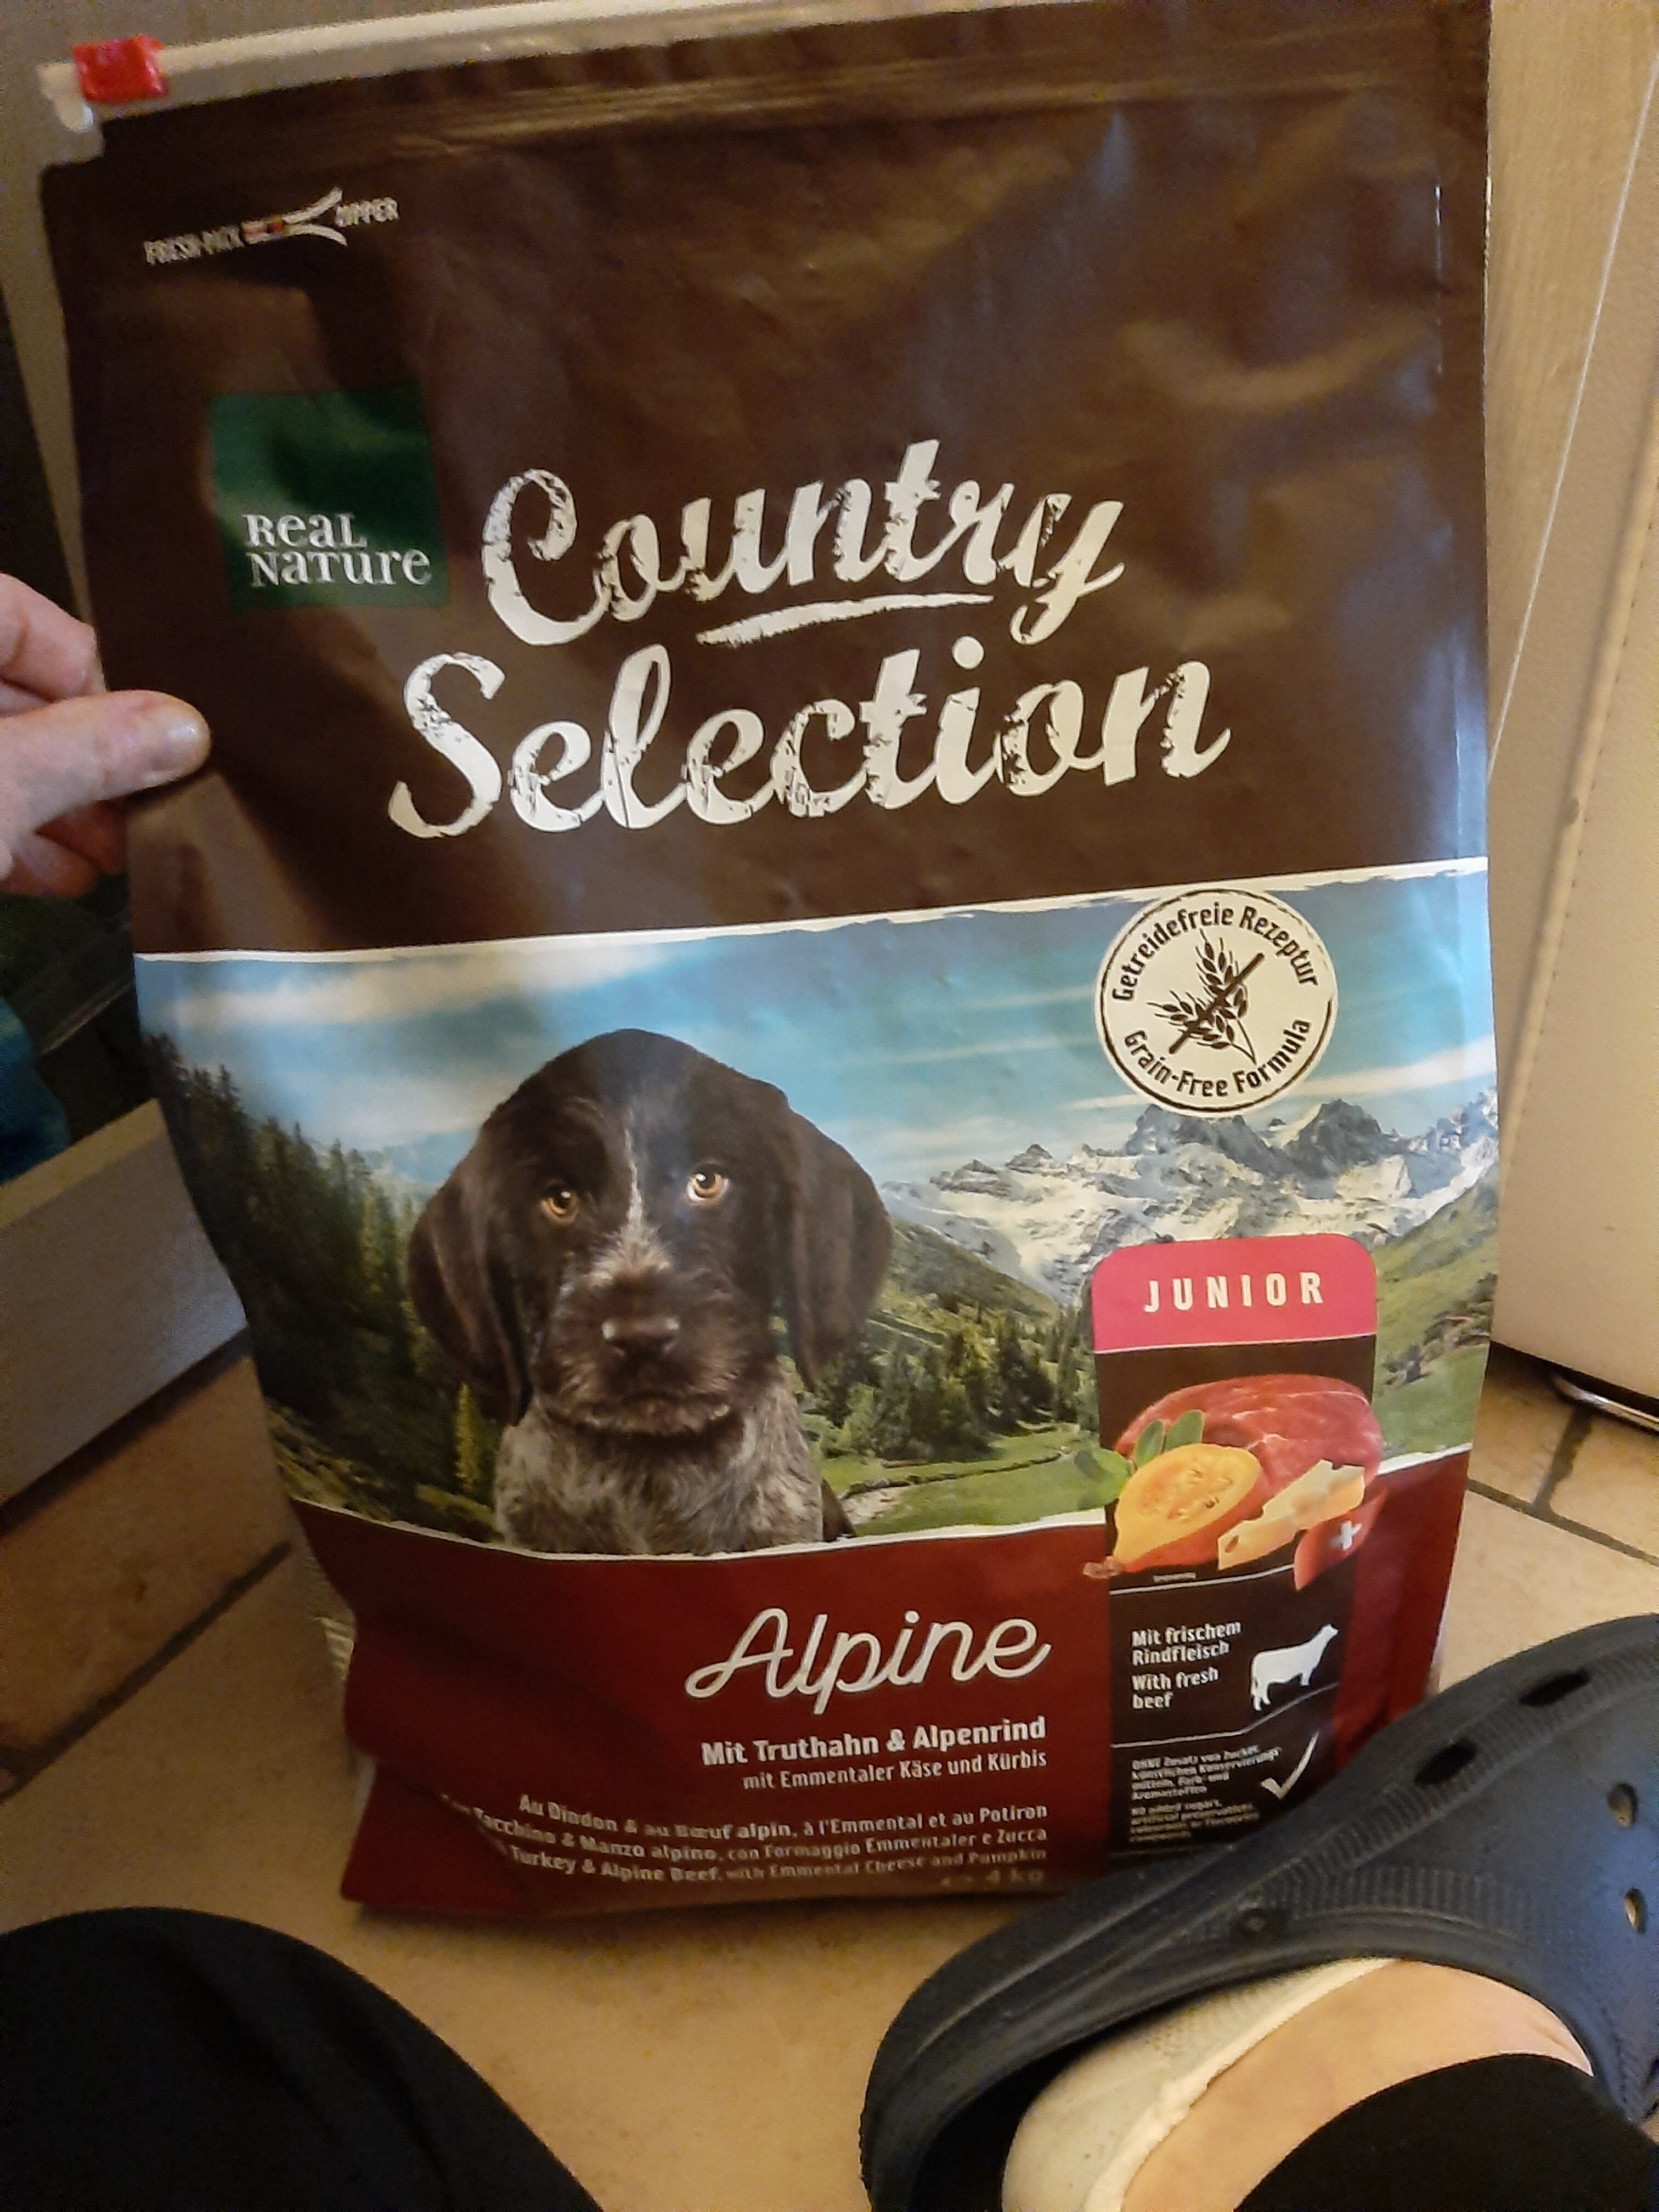 alpine - Product - it